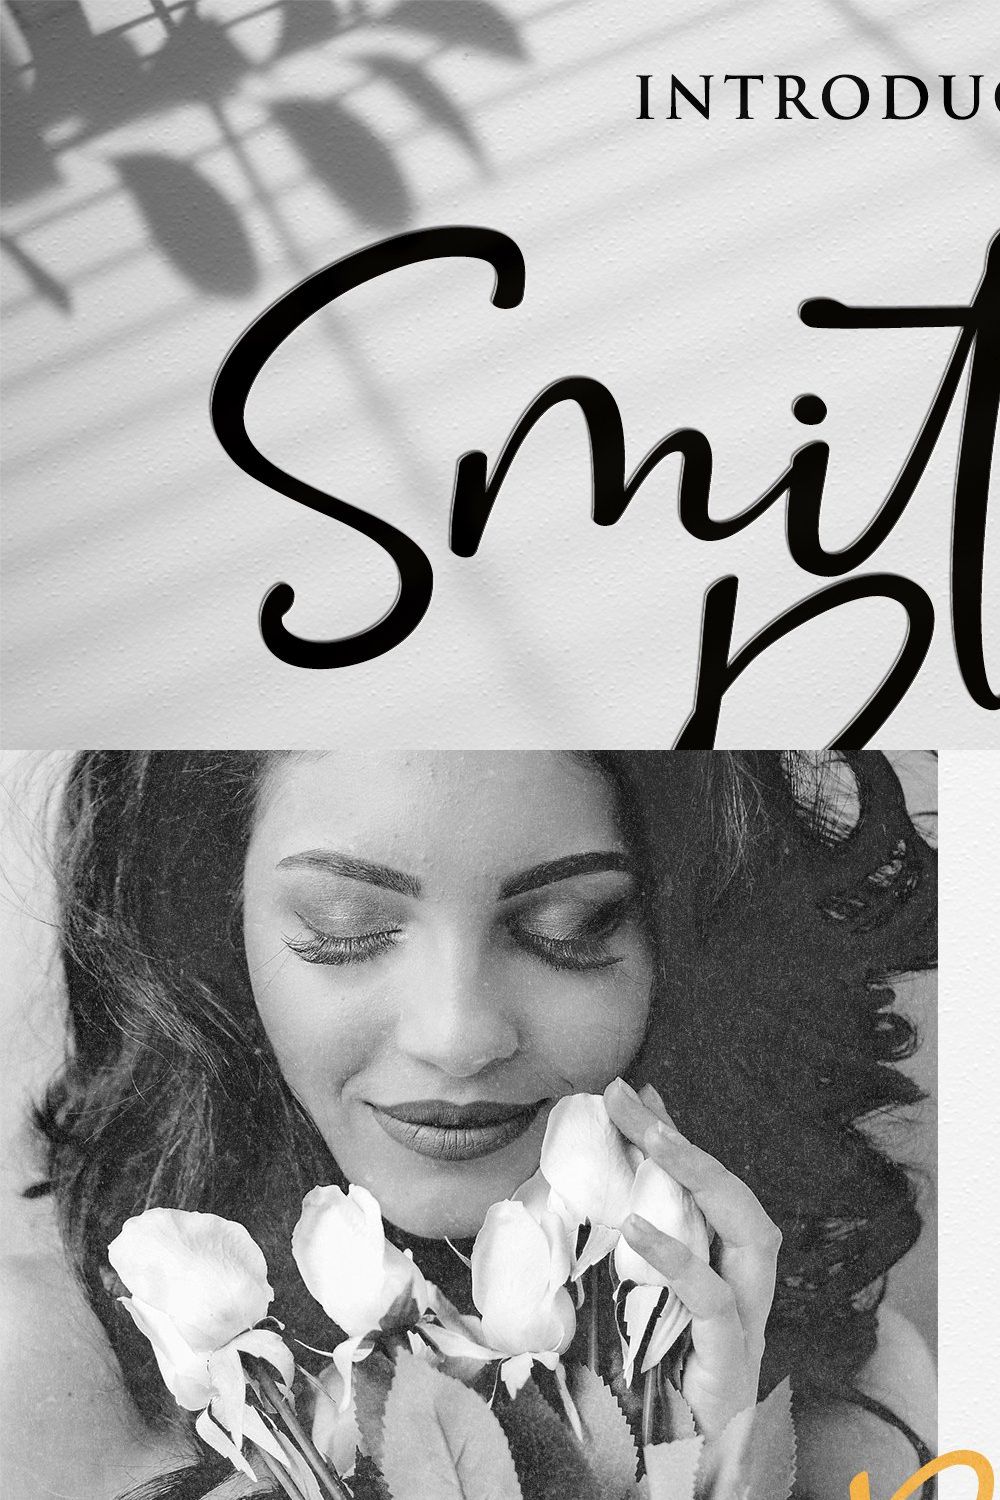 Smitta Bali - Luxury Signature Font pinterest preview image.